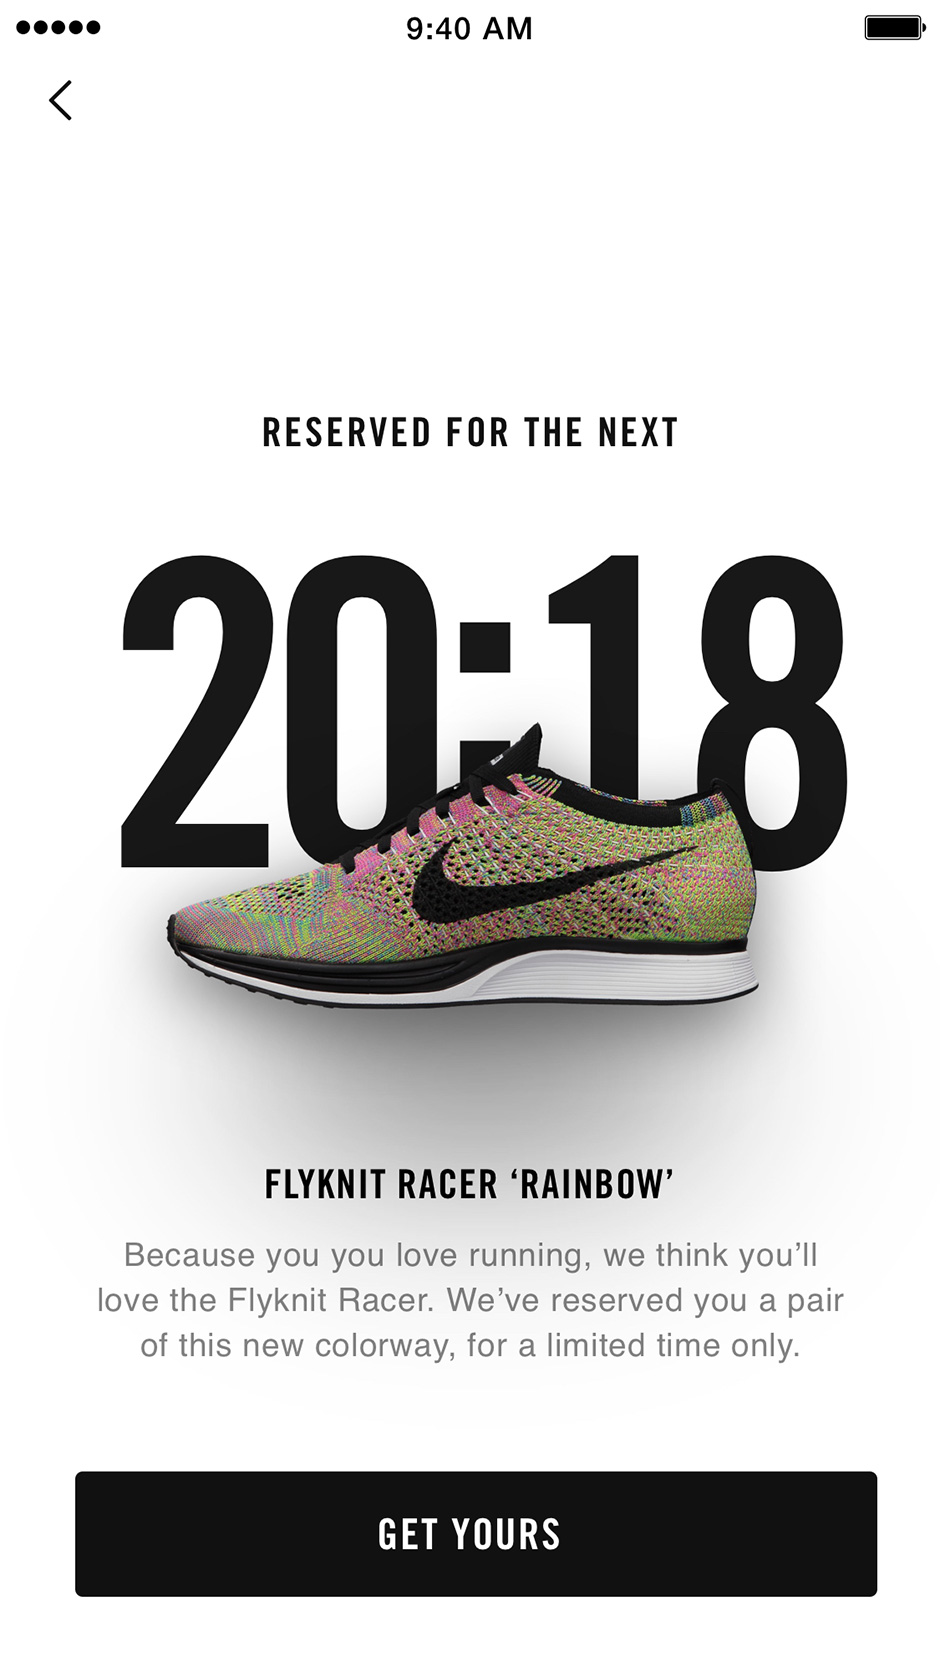 Nike New App August 2016 3